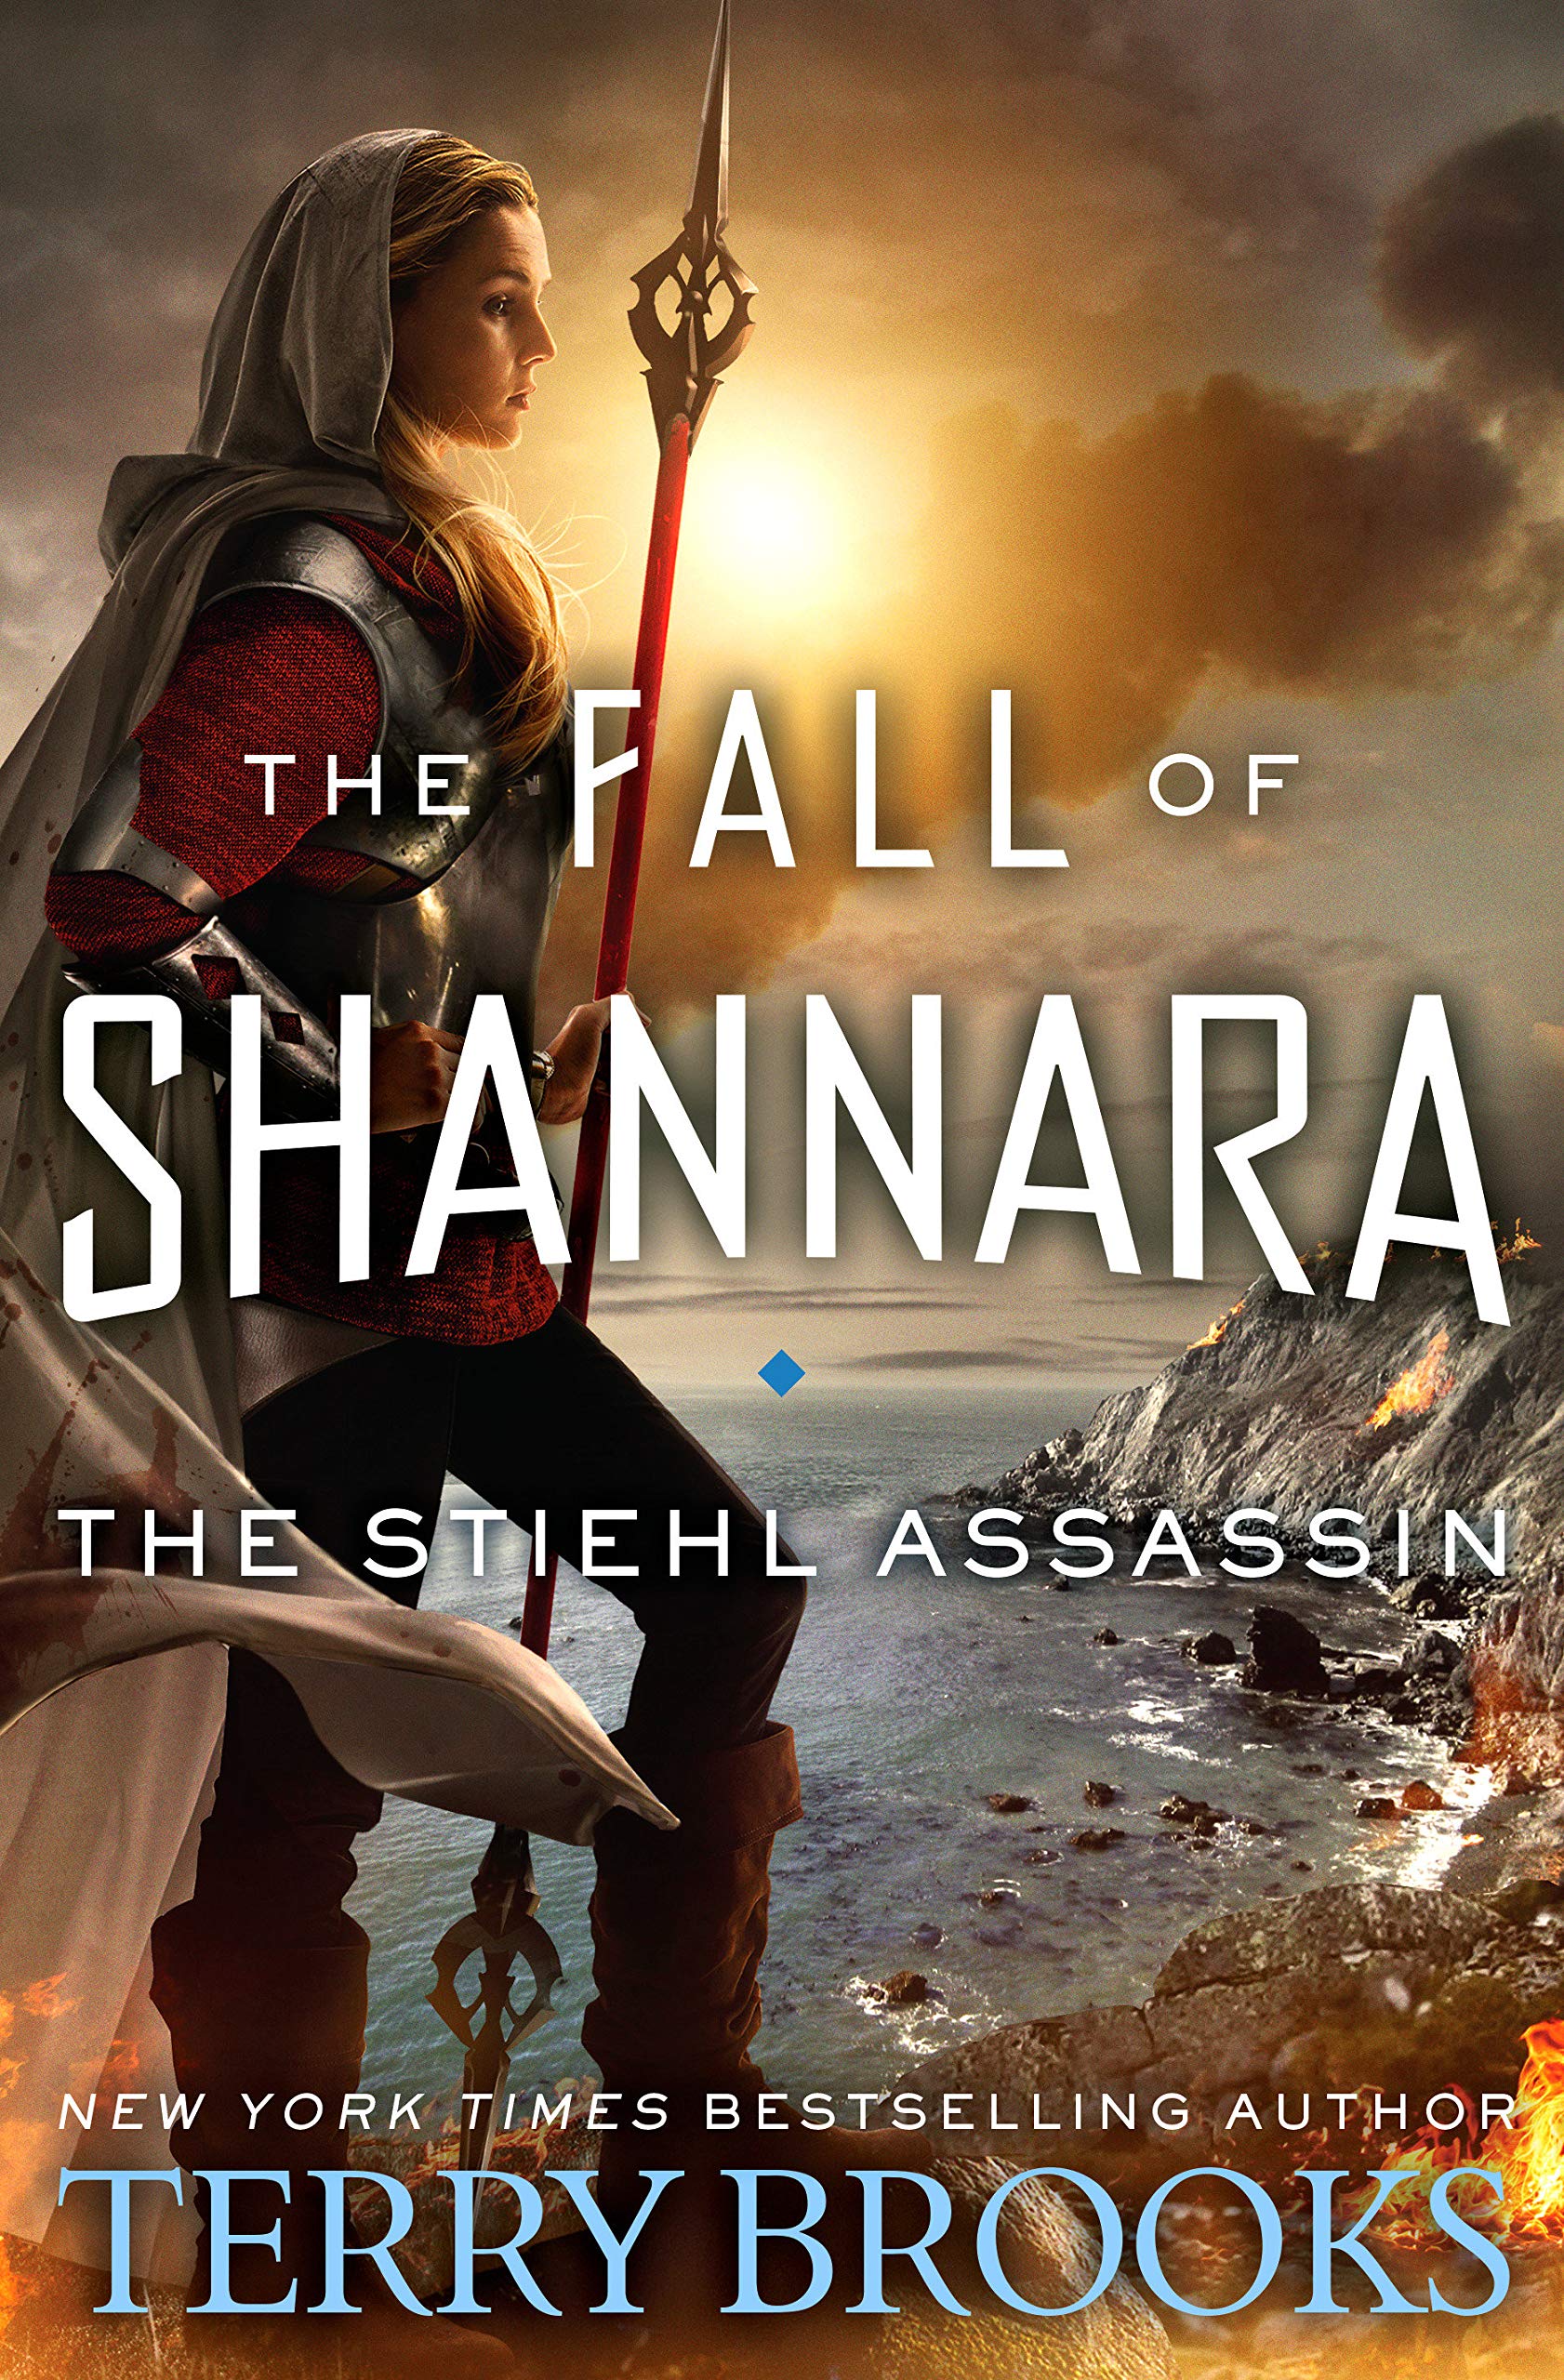 The Stiehl Assassin (The Fall of Shannara)